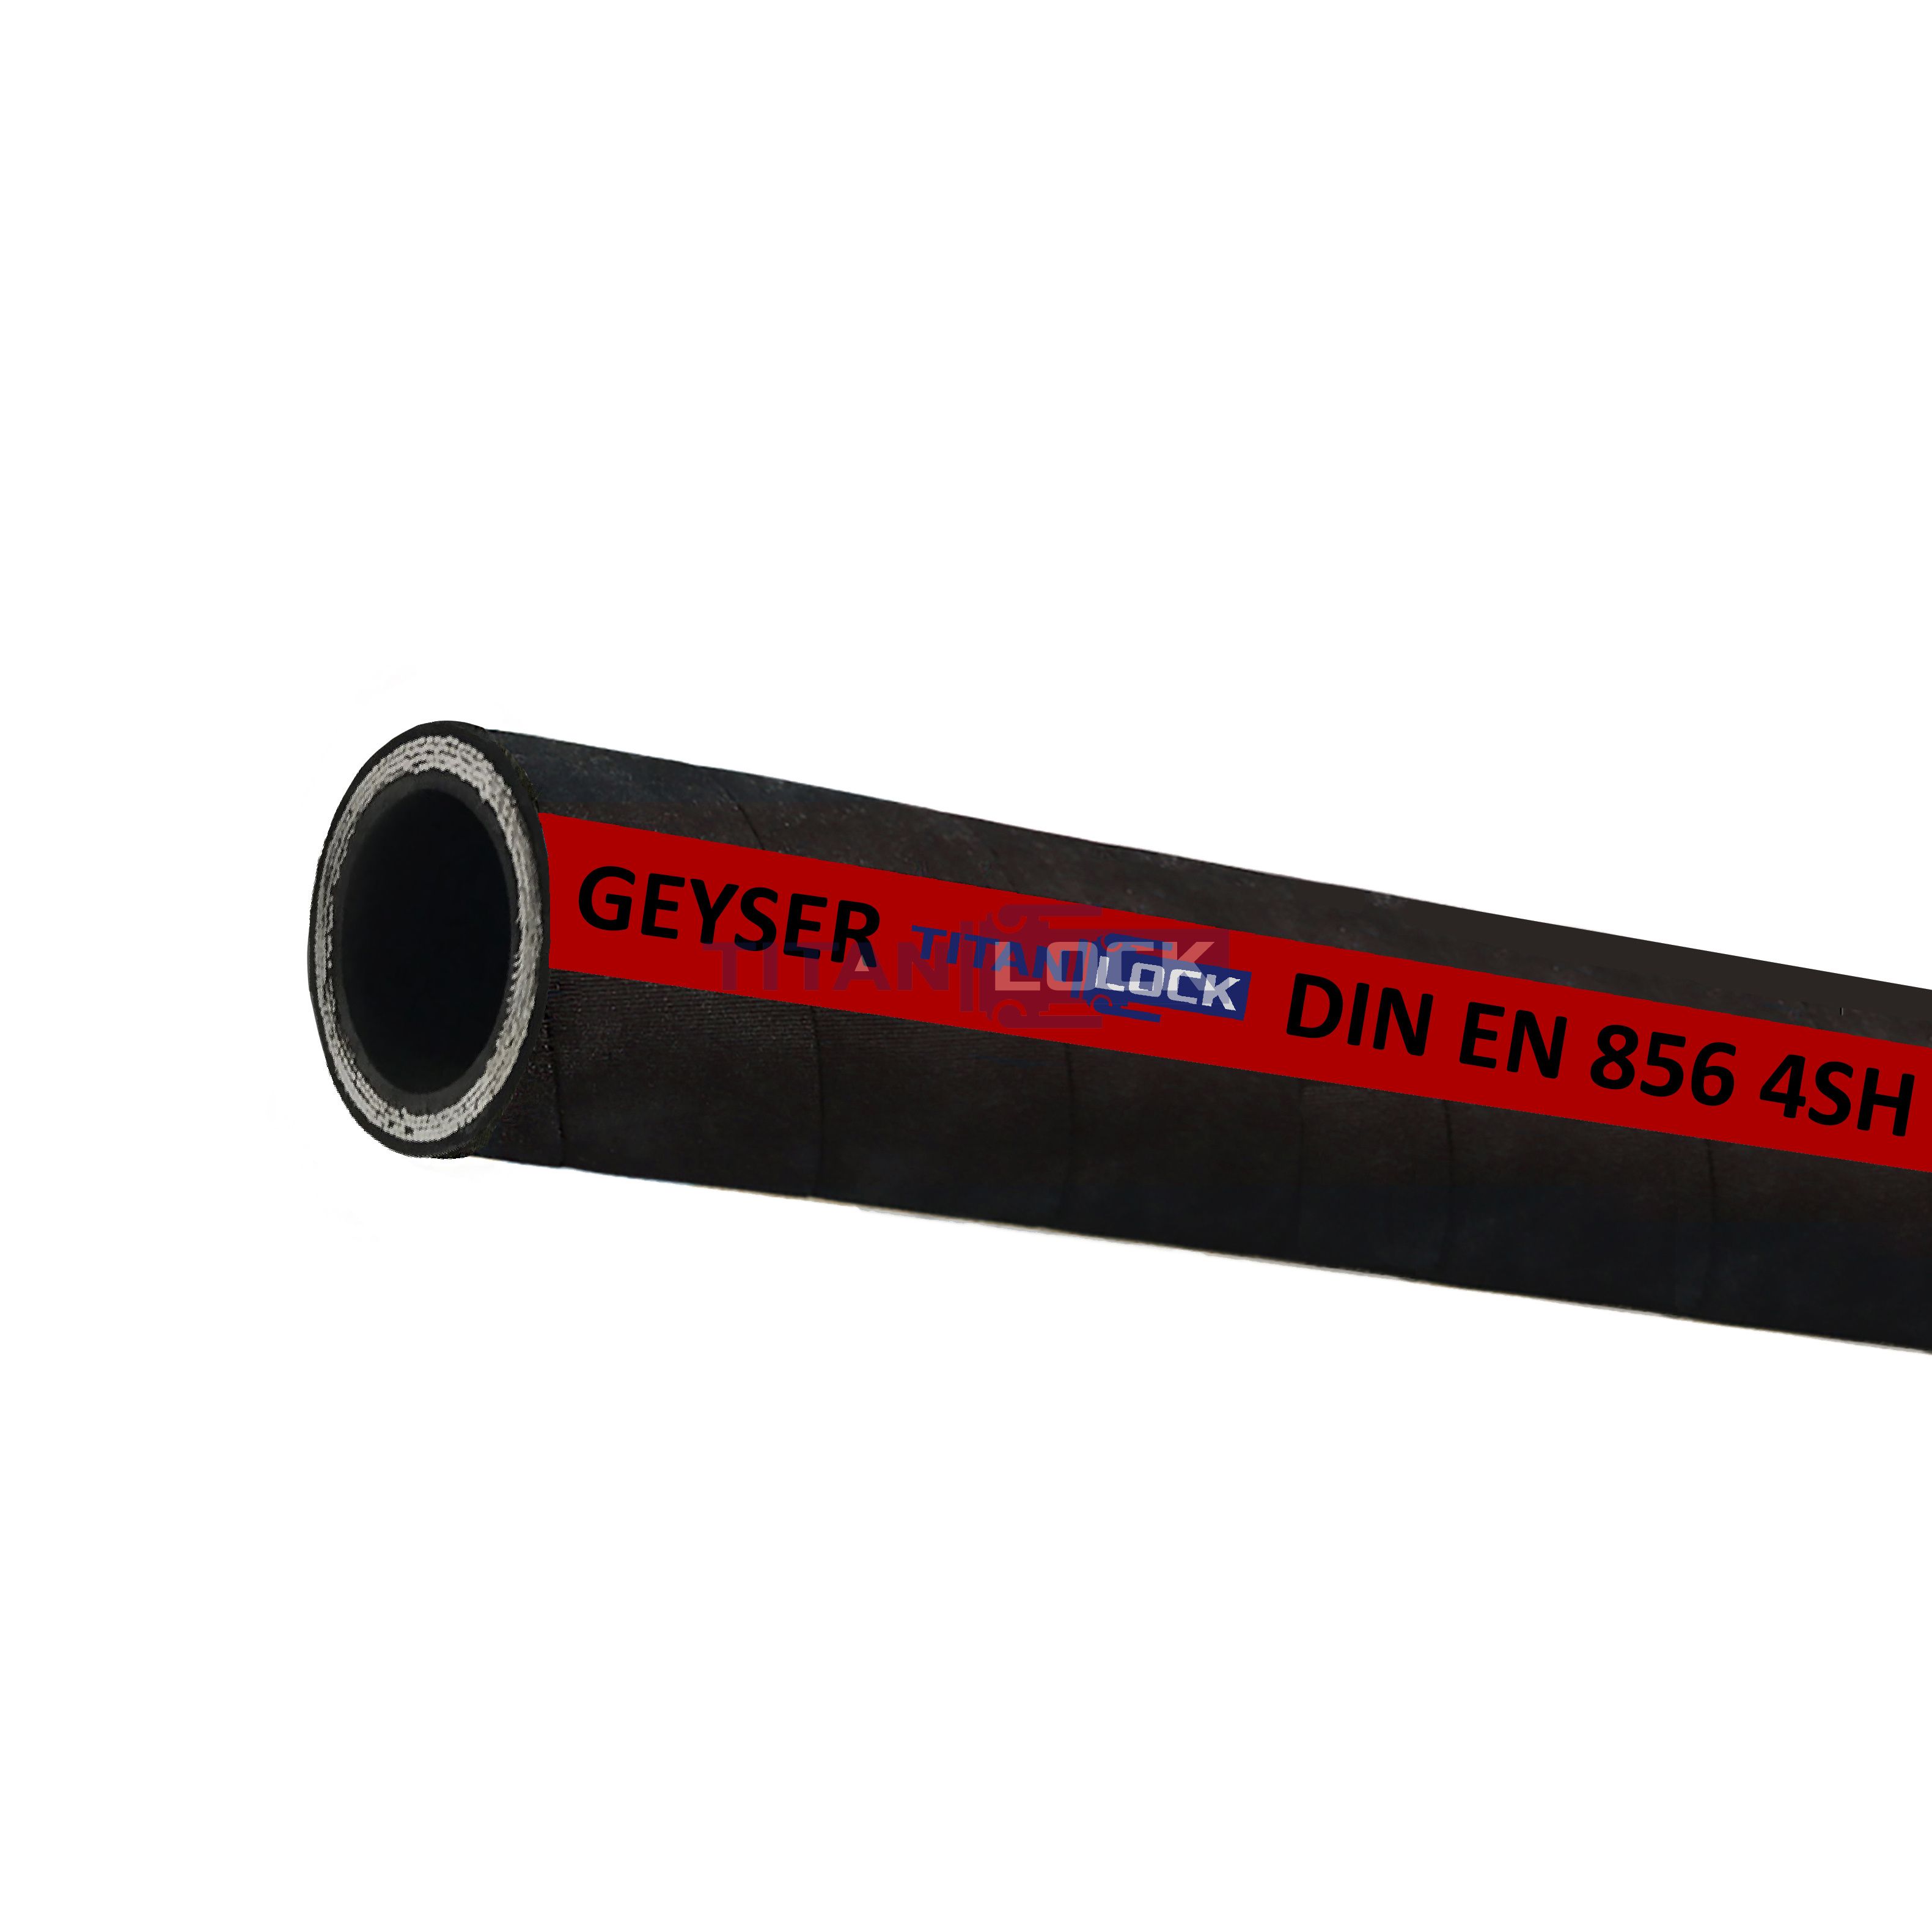 Рукав высокого давления GEYSER 4SH EN856, внутр.диам. 51мм, TLGY050-4SH TITAN LOCK